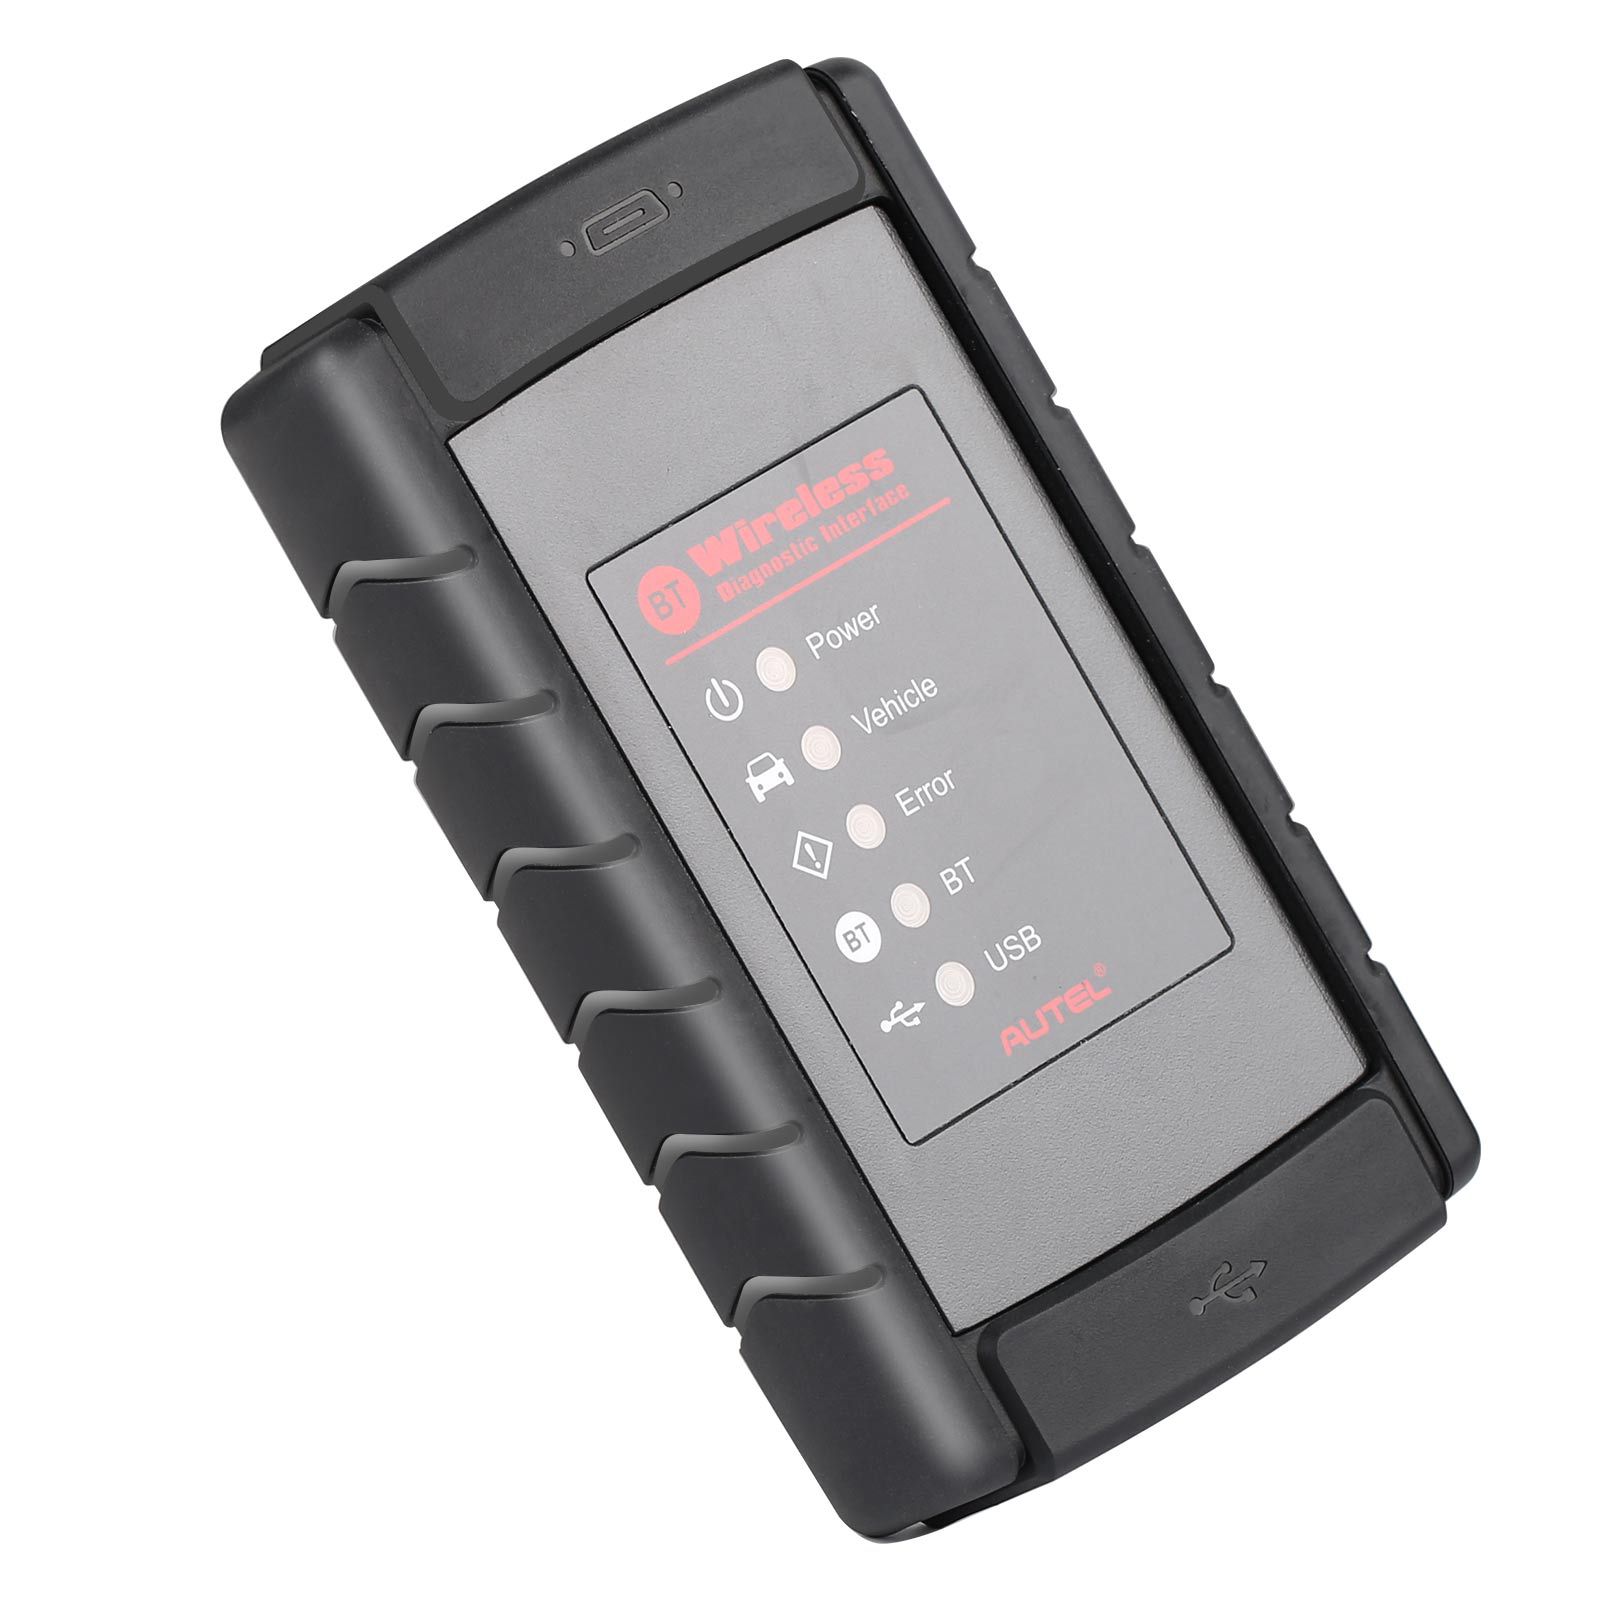 El original Adel VCI Bluetooth Adapter Wireless Diagnosis Interface Bluetooth Connection VCI es adecuado para ms908s / ms908 / mk908 / ms905 / maxisys Mini